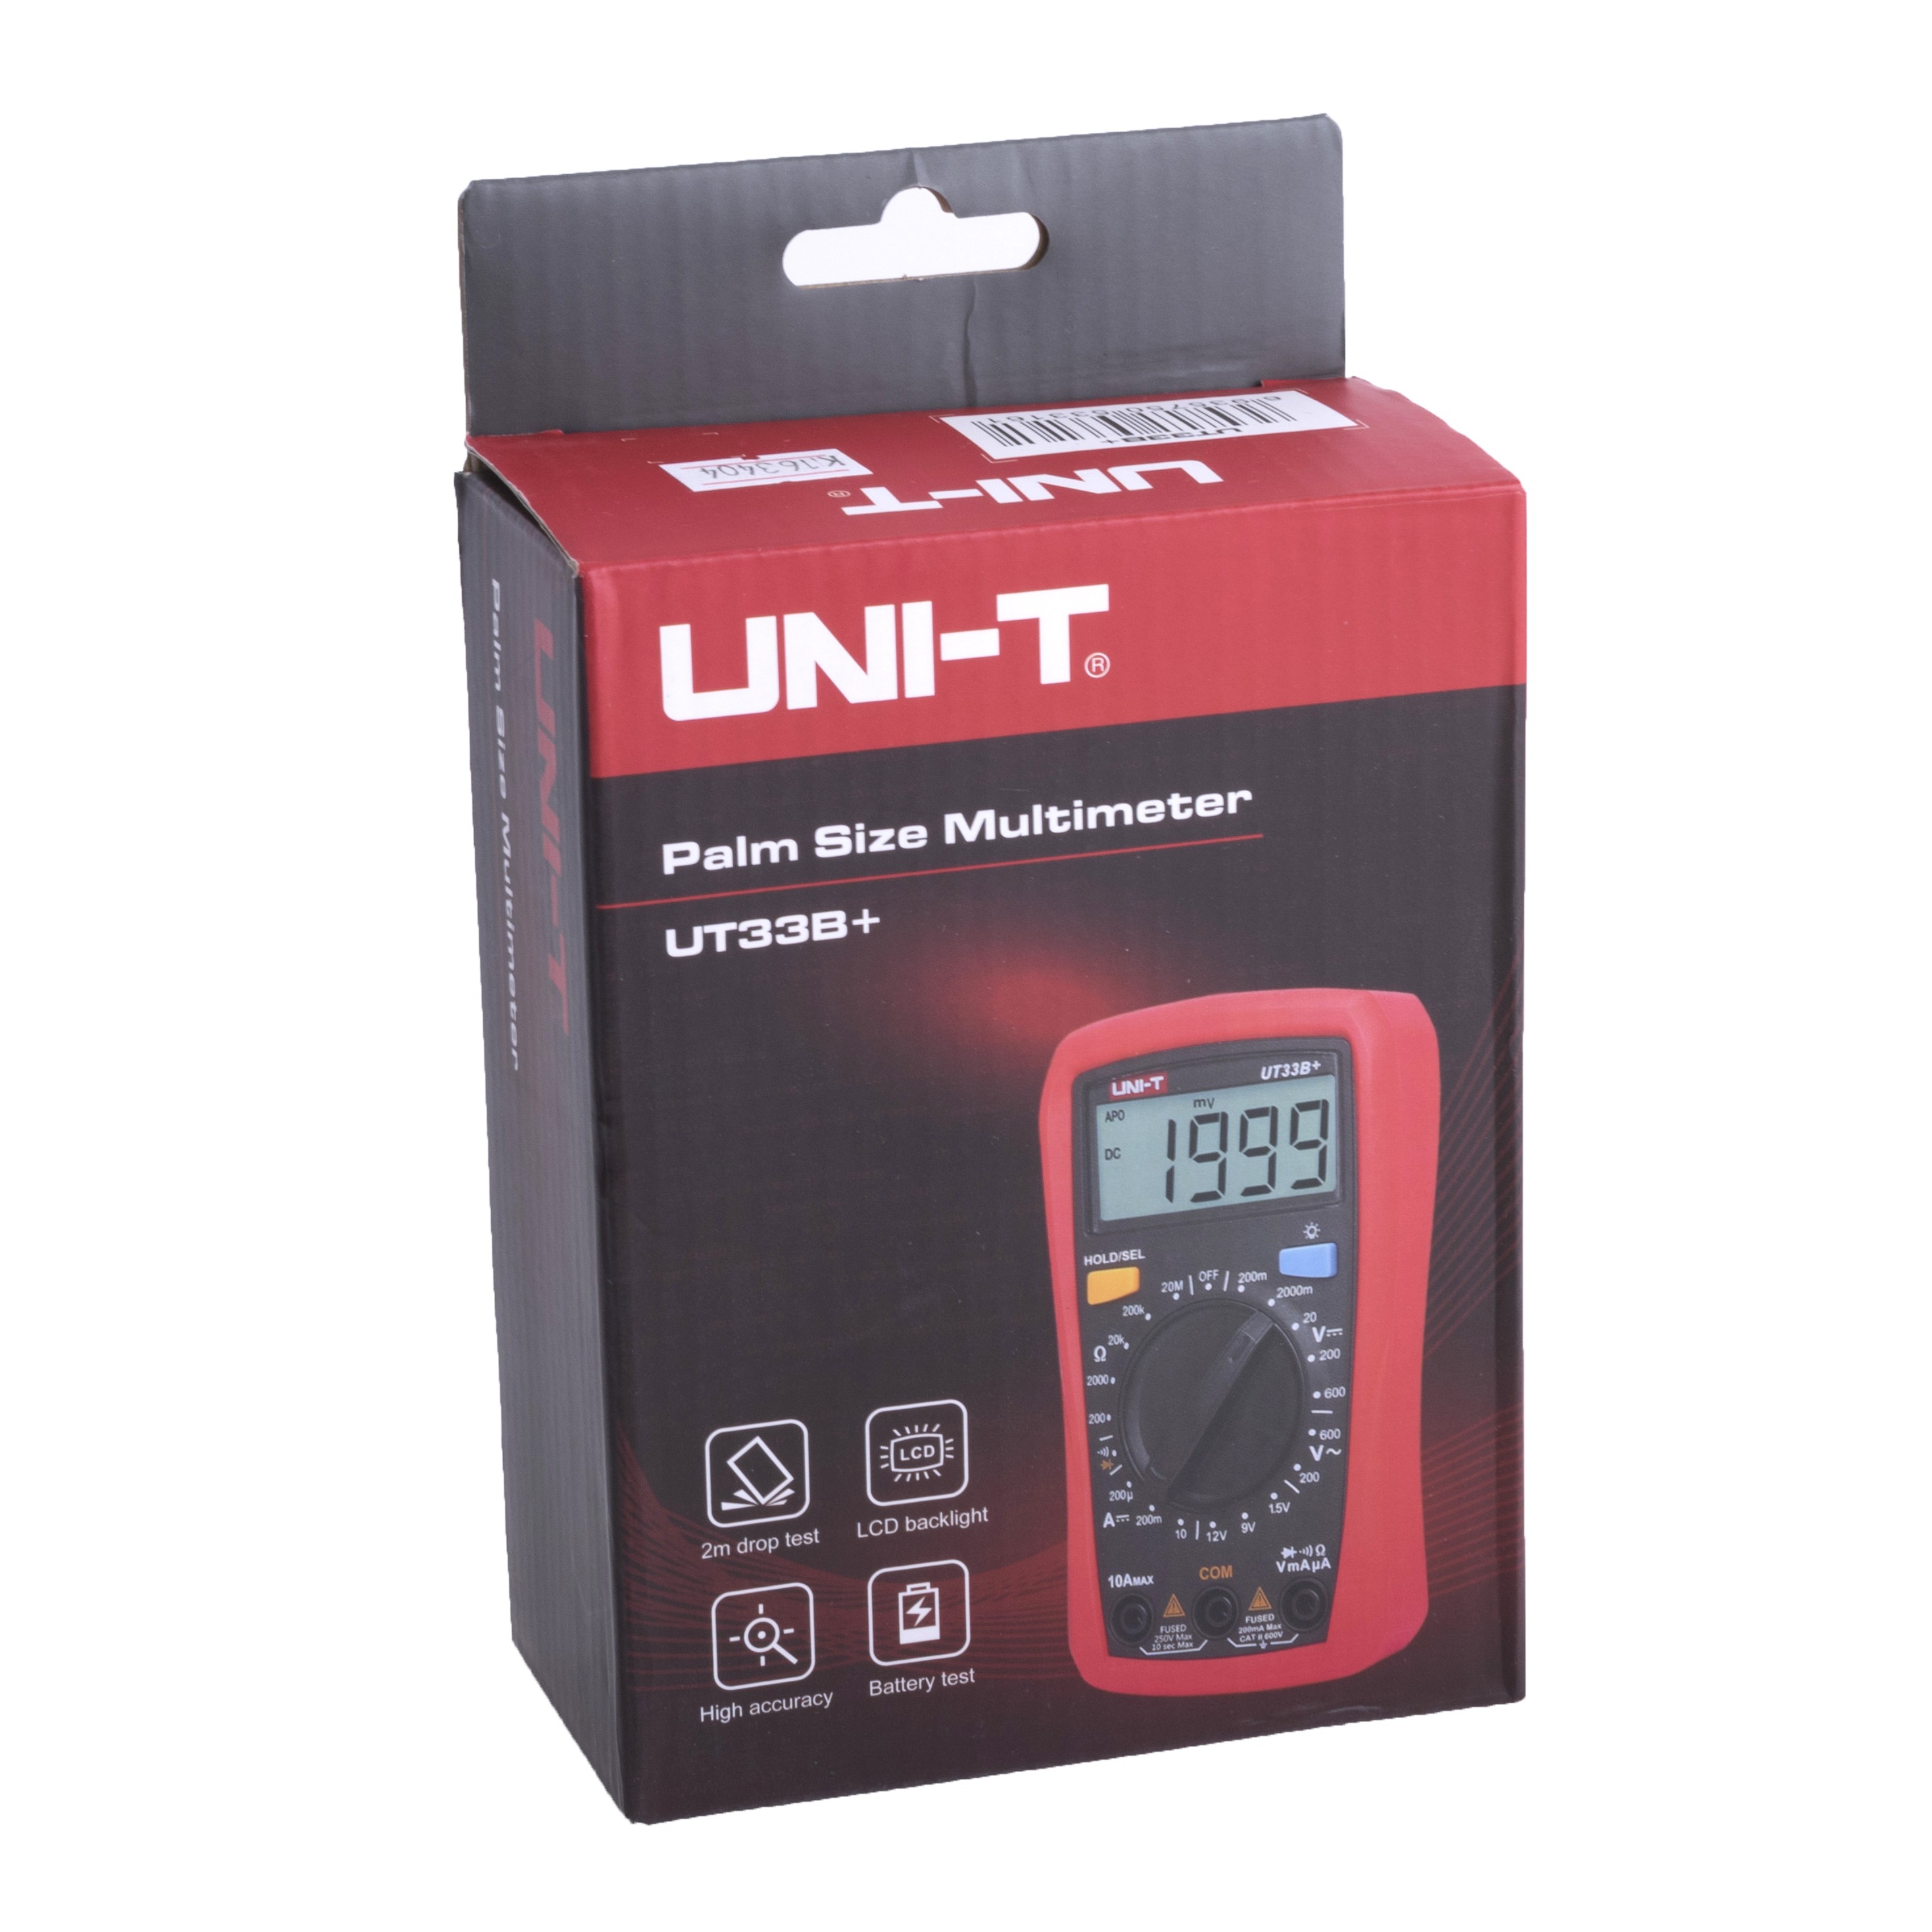 UT33B + (UNI-T) Palm Size Multimeter